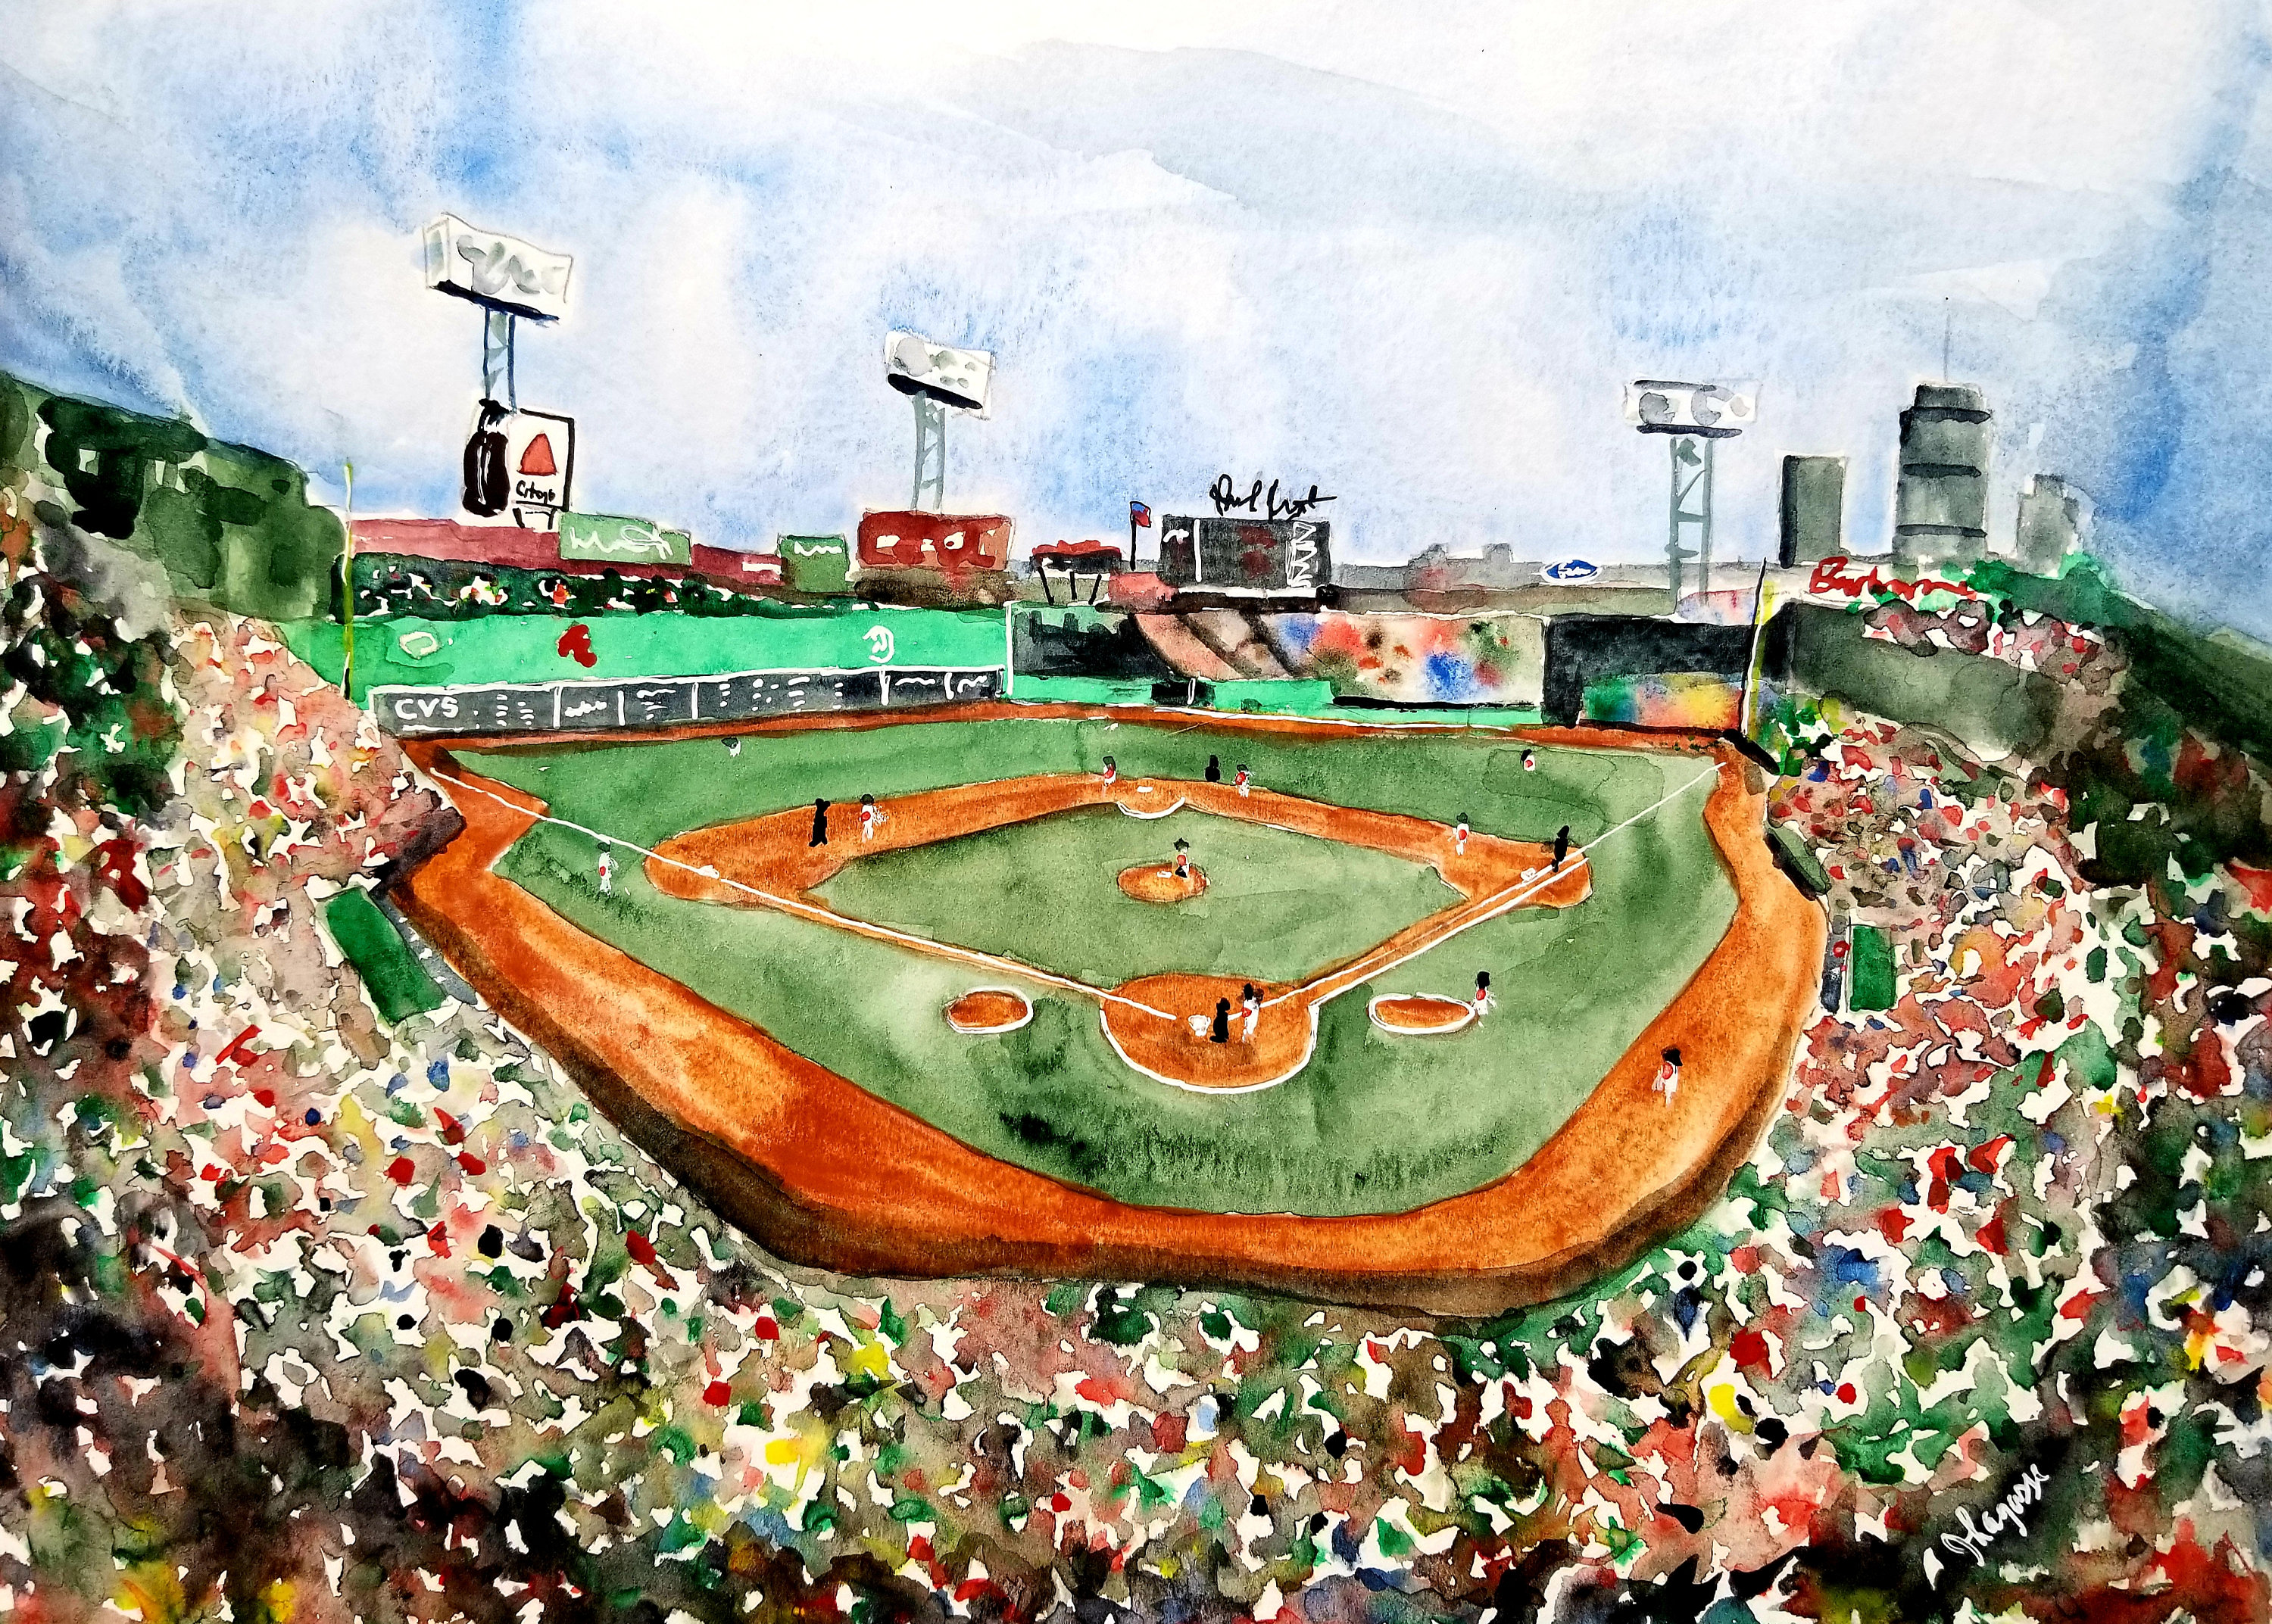 Fenway Park Sign Art: Boston Red Sox Gifts, Fenway Park Print, Boston Red  Sox Retro, Fenway Park Poster, Baseball Ballpark Sports Artwork